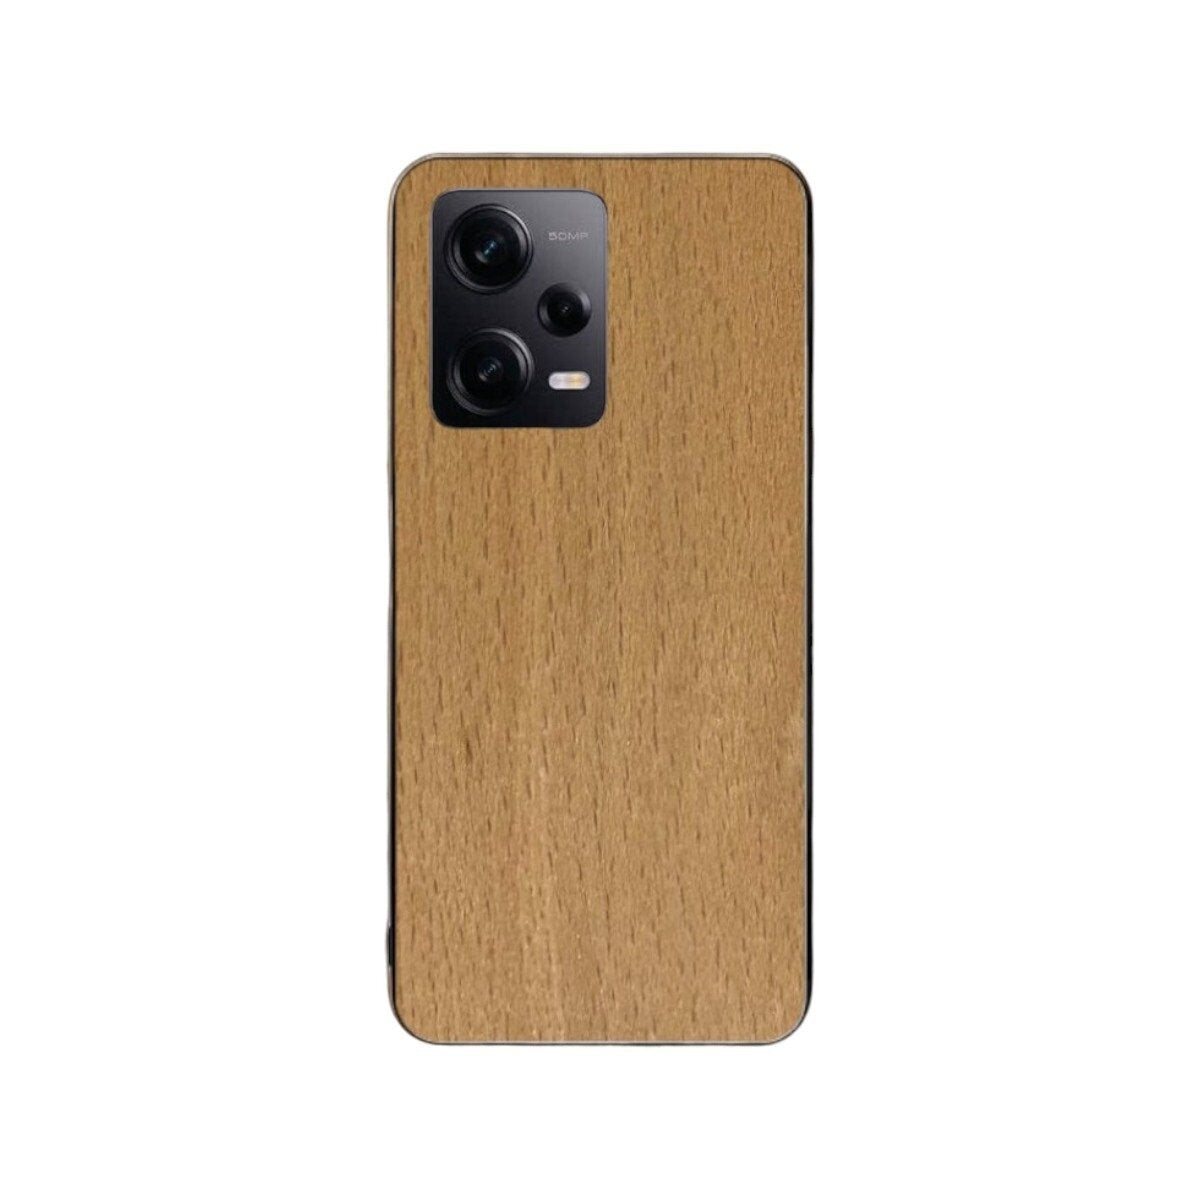 Xiaomi Redmi Note case - The simple one